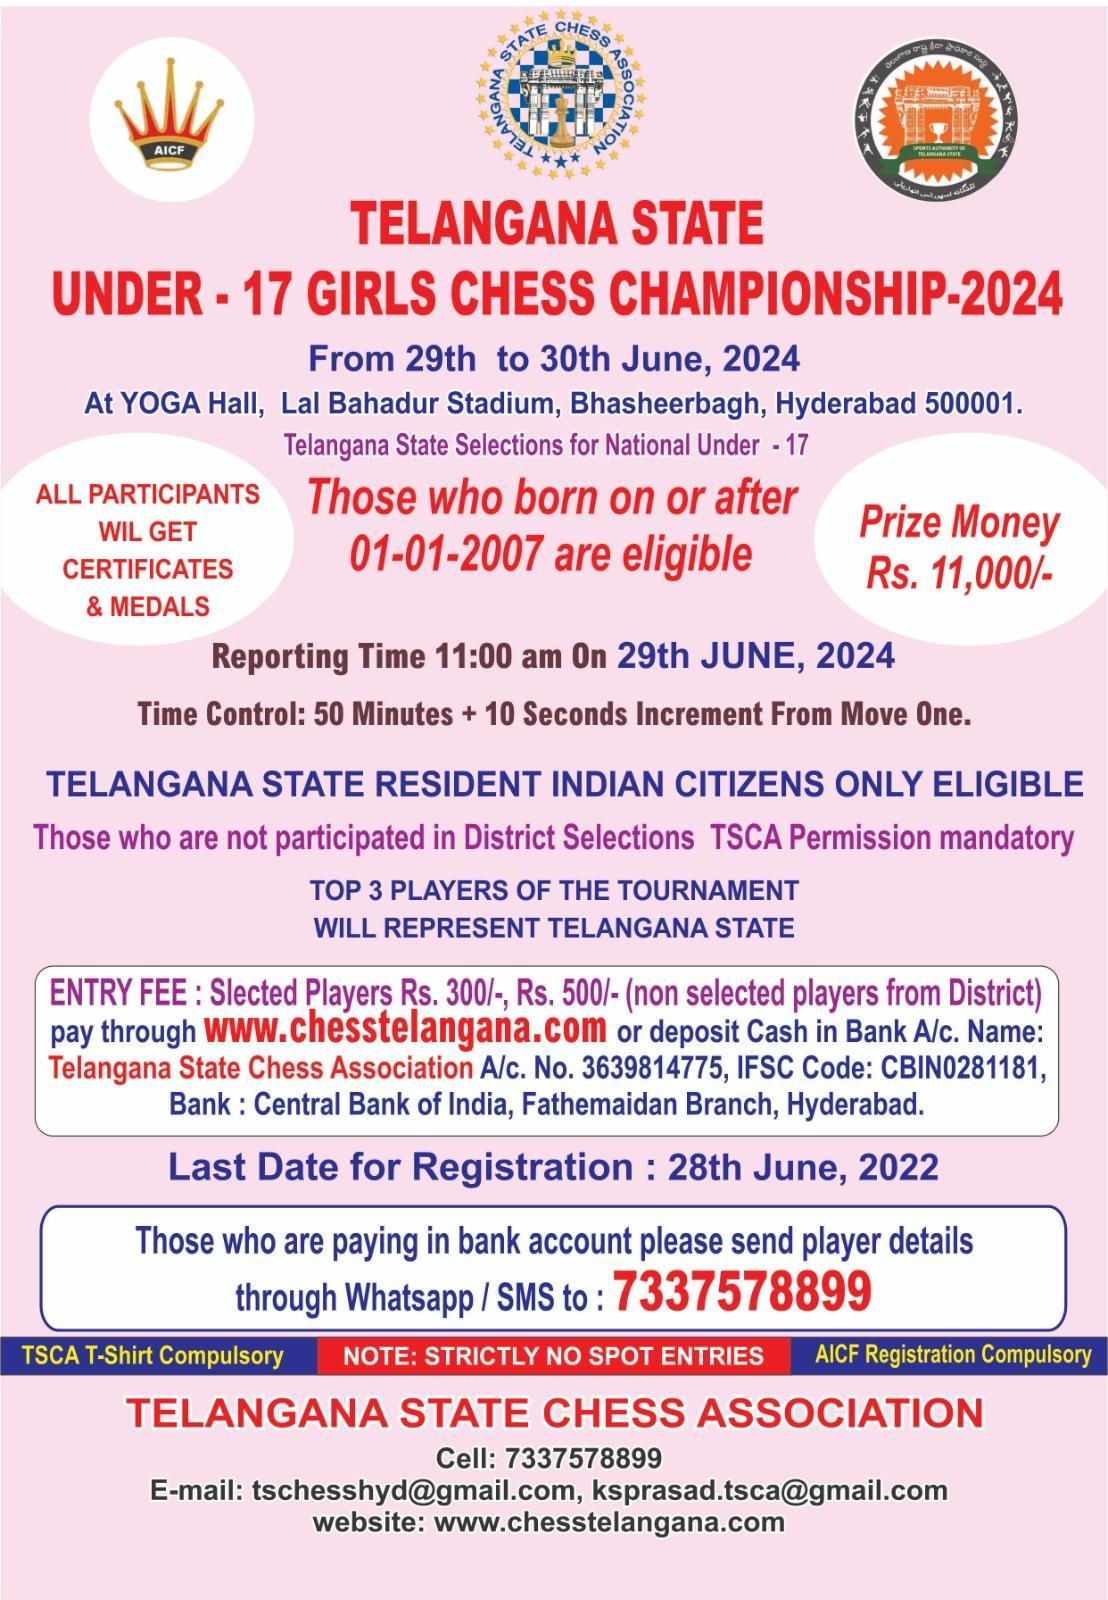 Under-17 girls chess championship